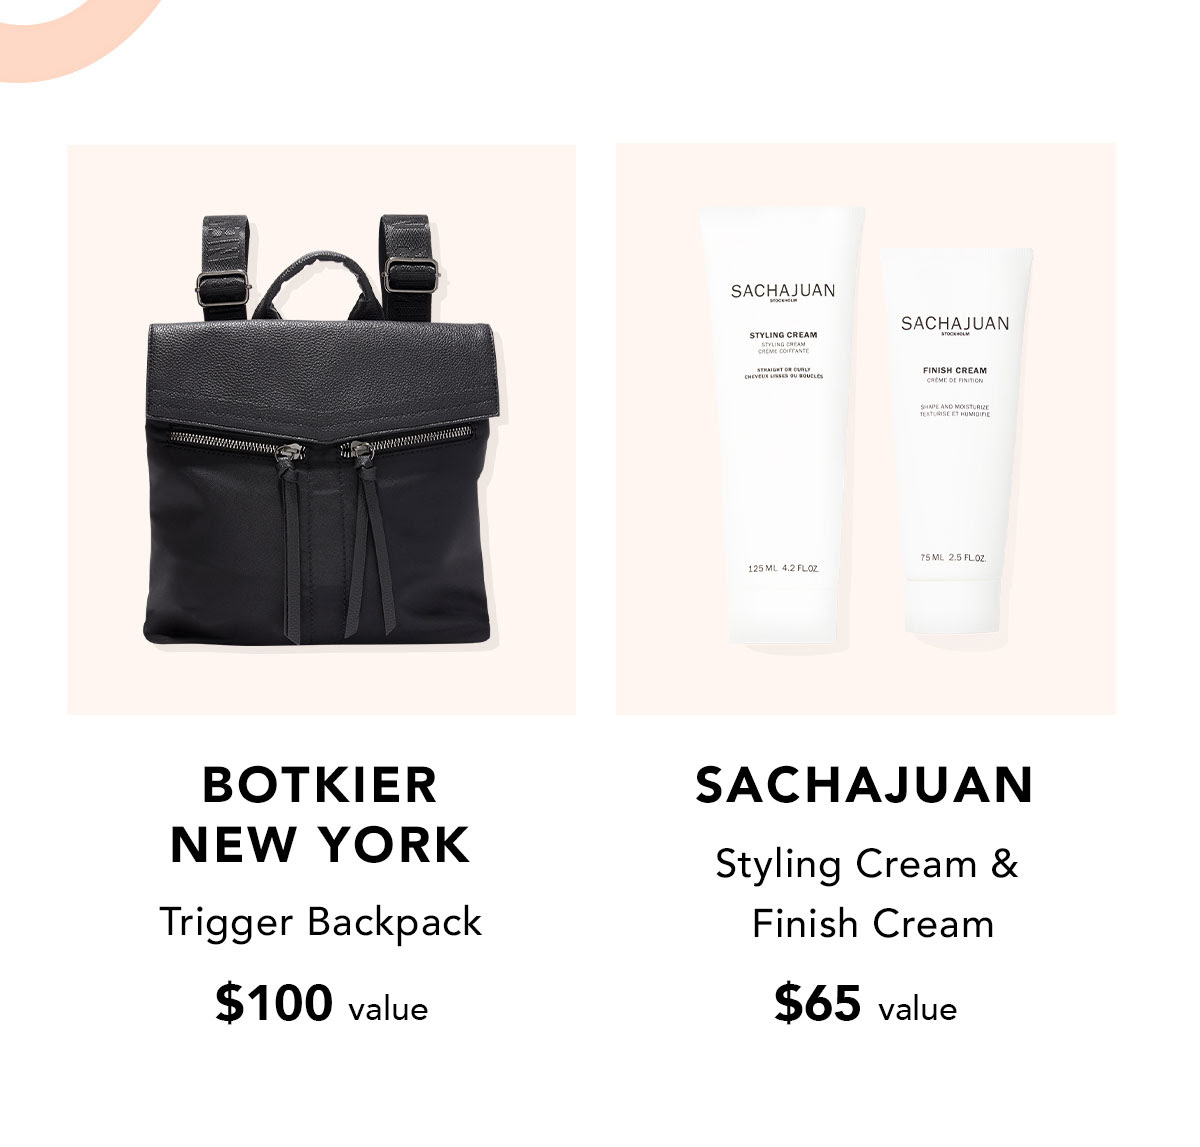 Botkier New York Trigger Backpack $100 value | SACHAJUAN Styling Cream & Finish Cream $65 value